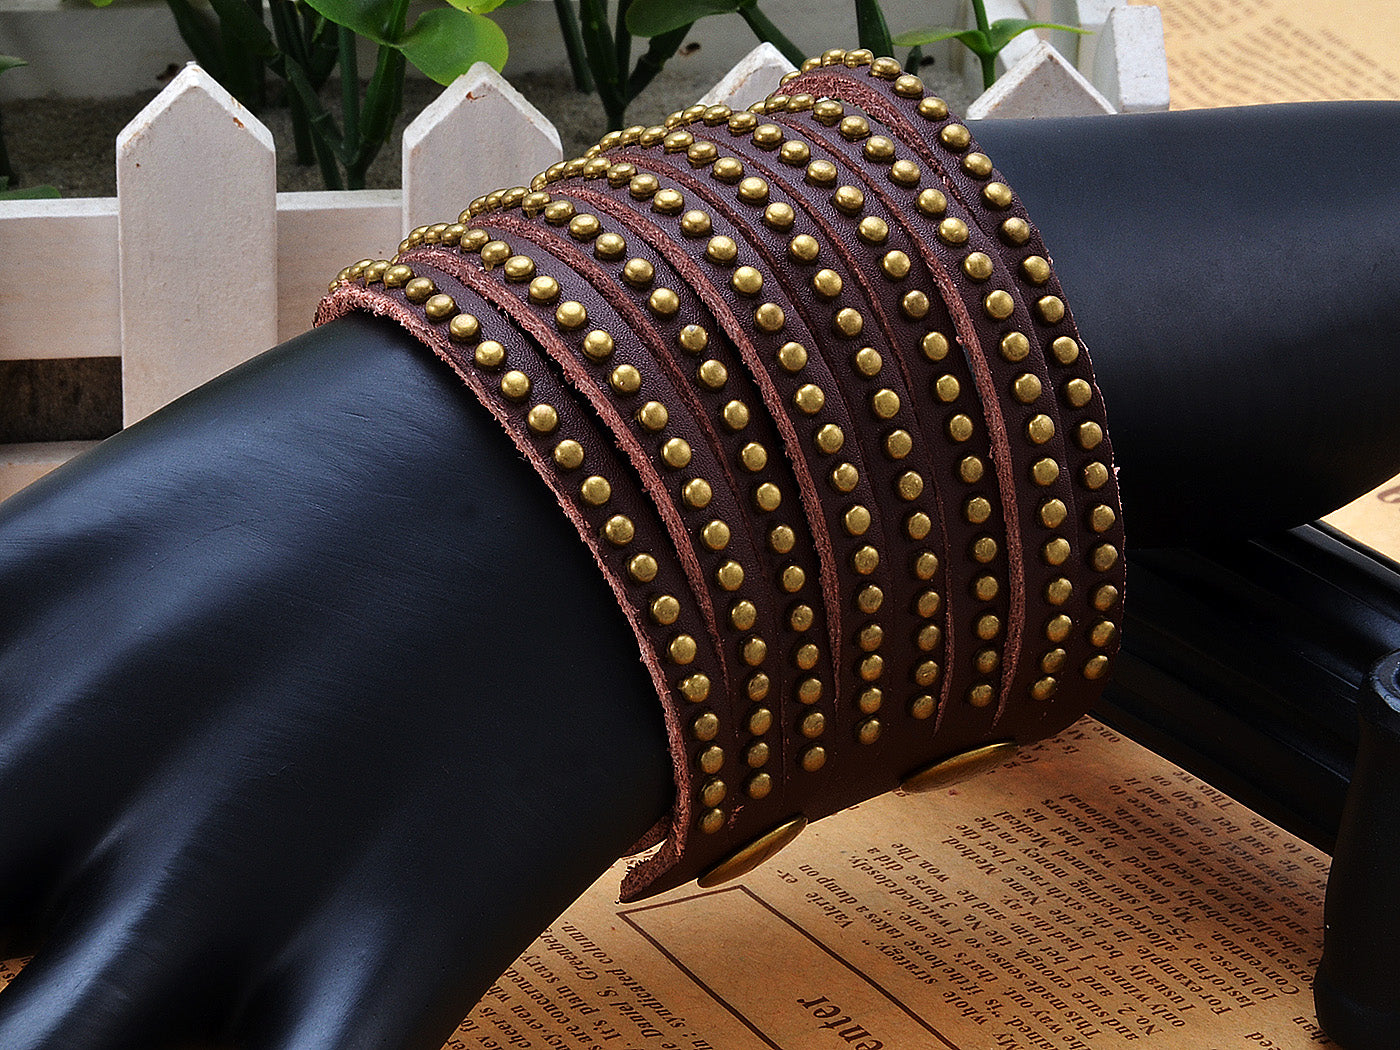 Black Leather Multi Strand Studded Beads Snap On Arm Cuff Bracelet